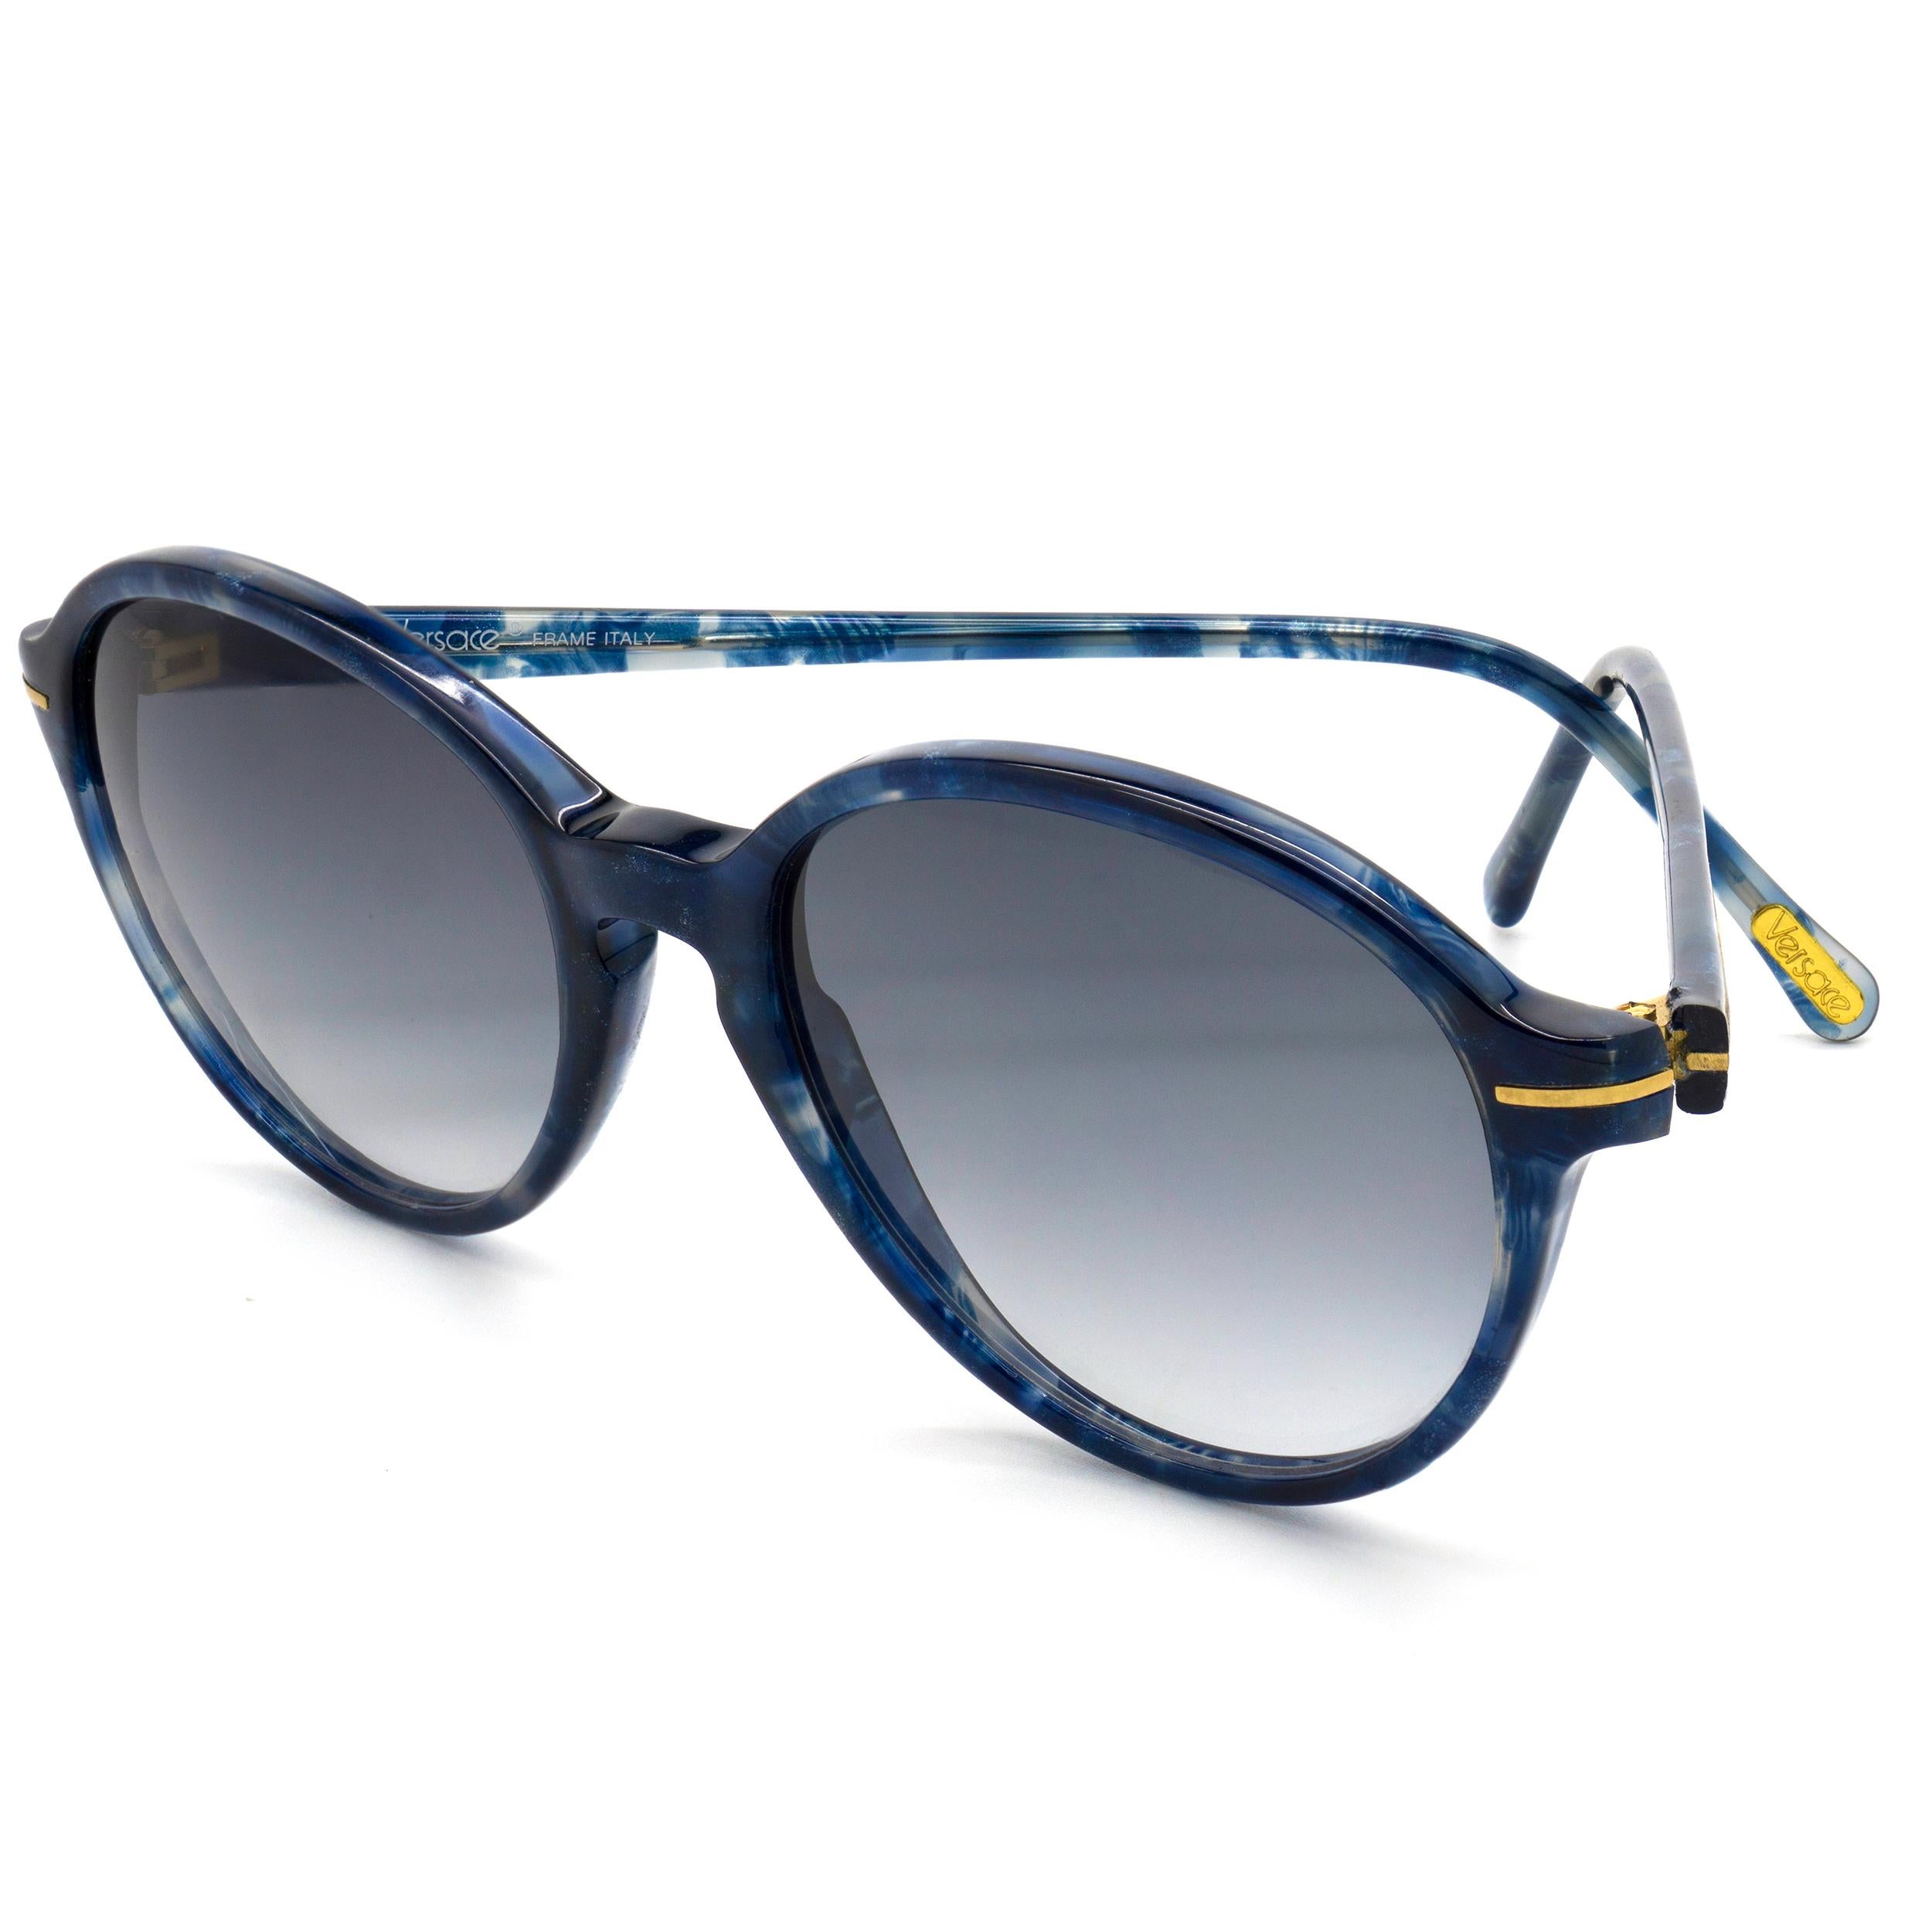 blue versace sunglasses